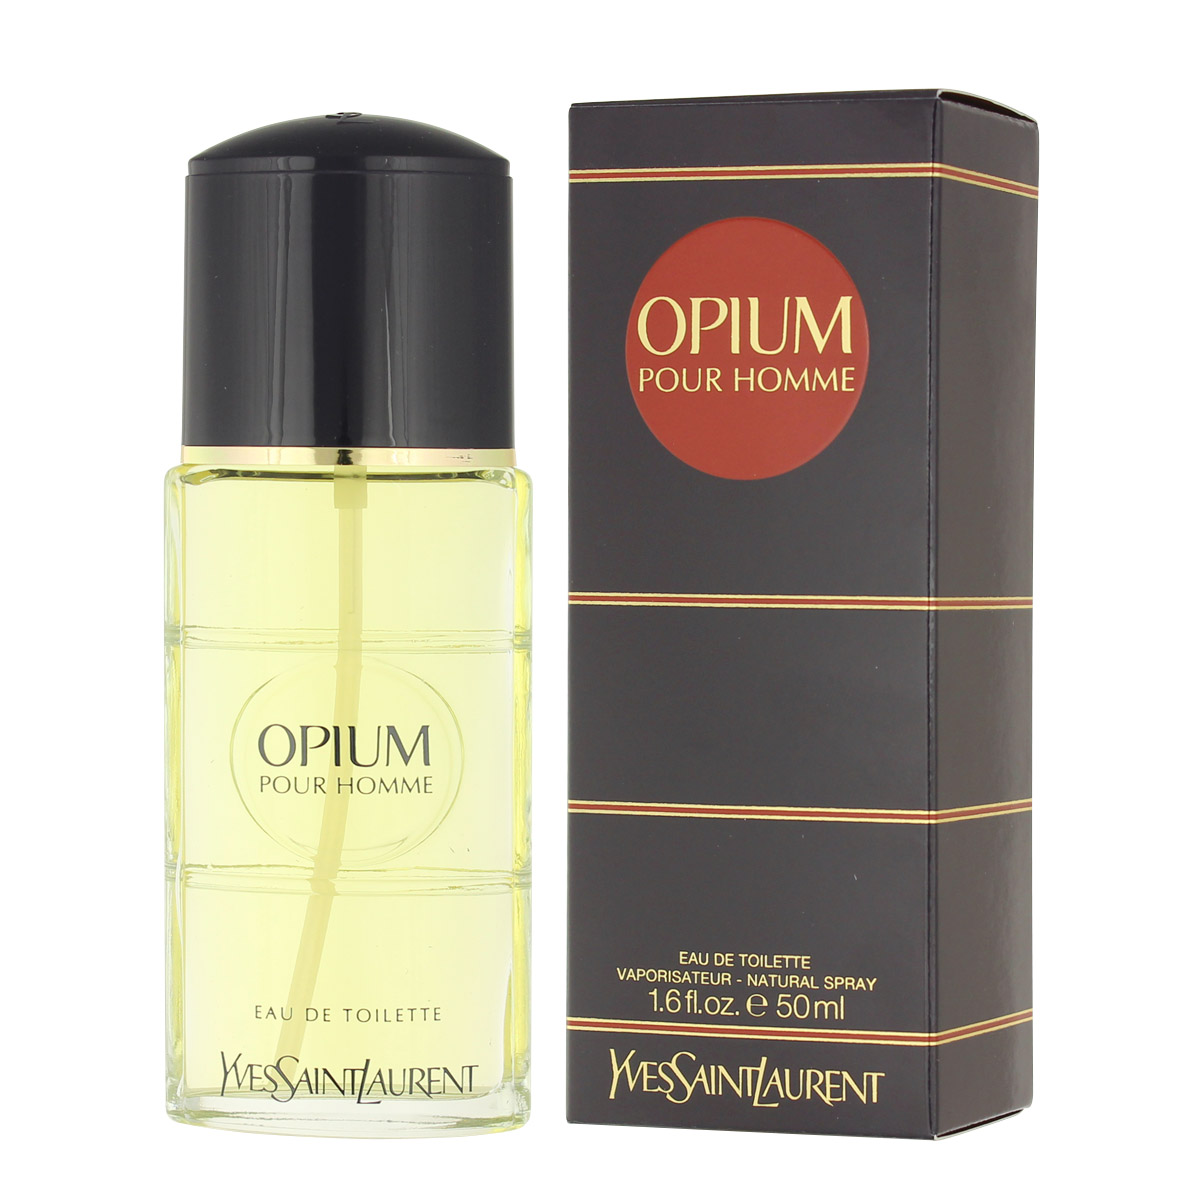 Opium homme. Opium pour homme Yves Saint Laurent для мужчин. Туалетная вода Yves Saint Laurent Opium pour homme. Опиум мужской Парфюм Ив сен Лоран. YSL Opium мужские духи.